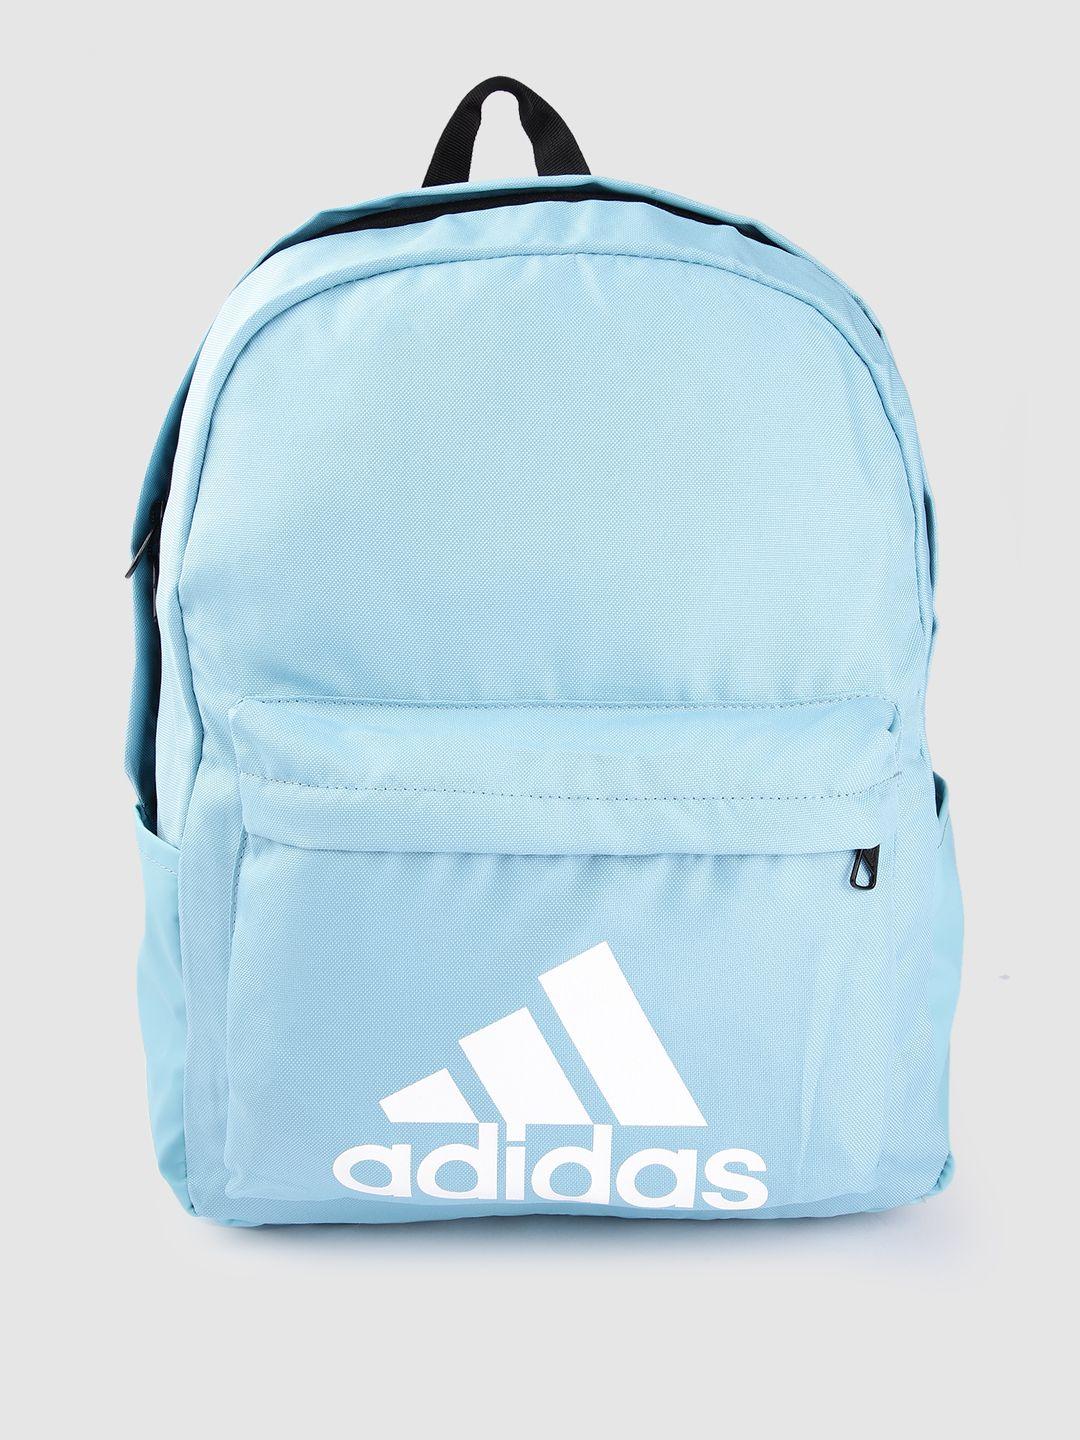 adidas unisex brand logo print backpack - 27 l